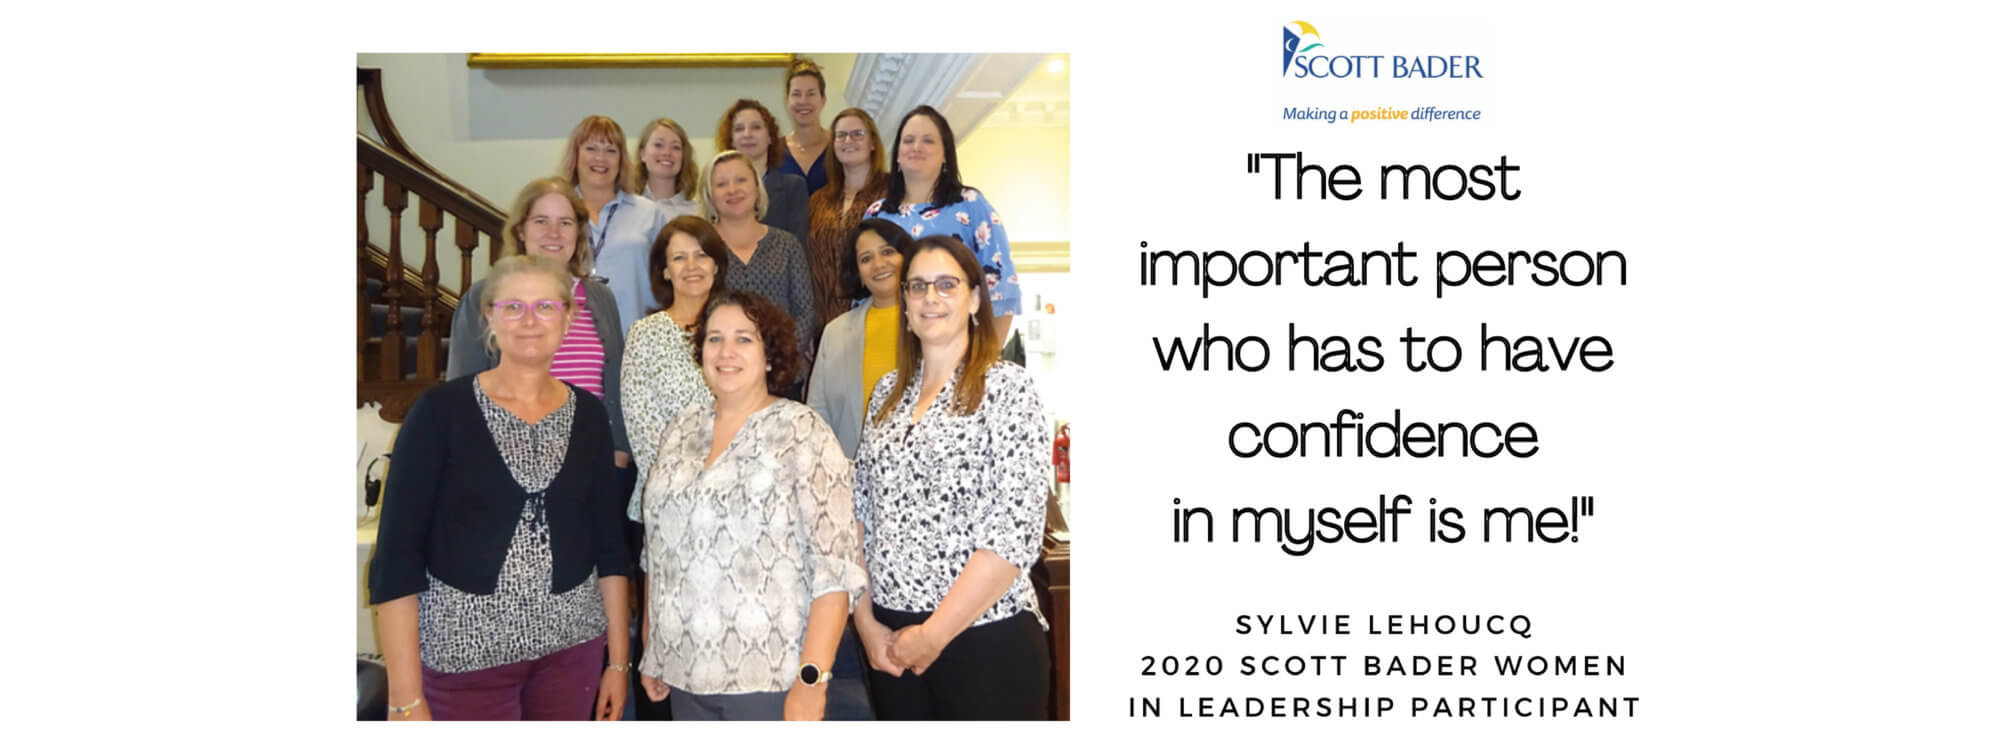 Scott Bader’s inaugural Women in Leadership development programme is a huge success!